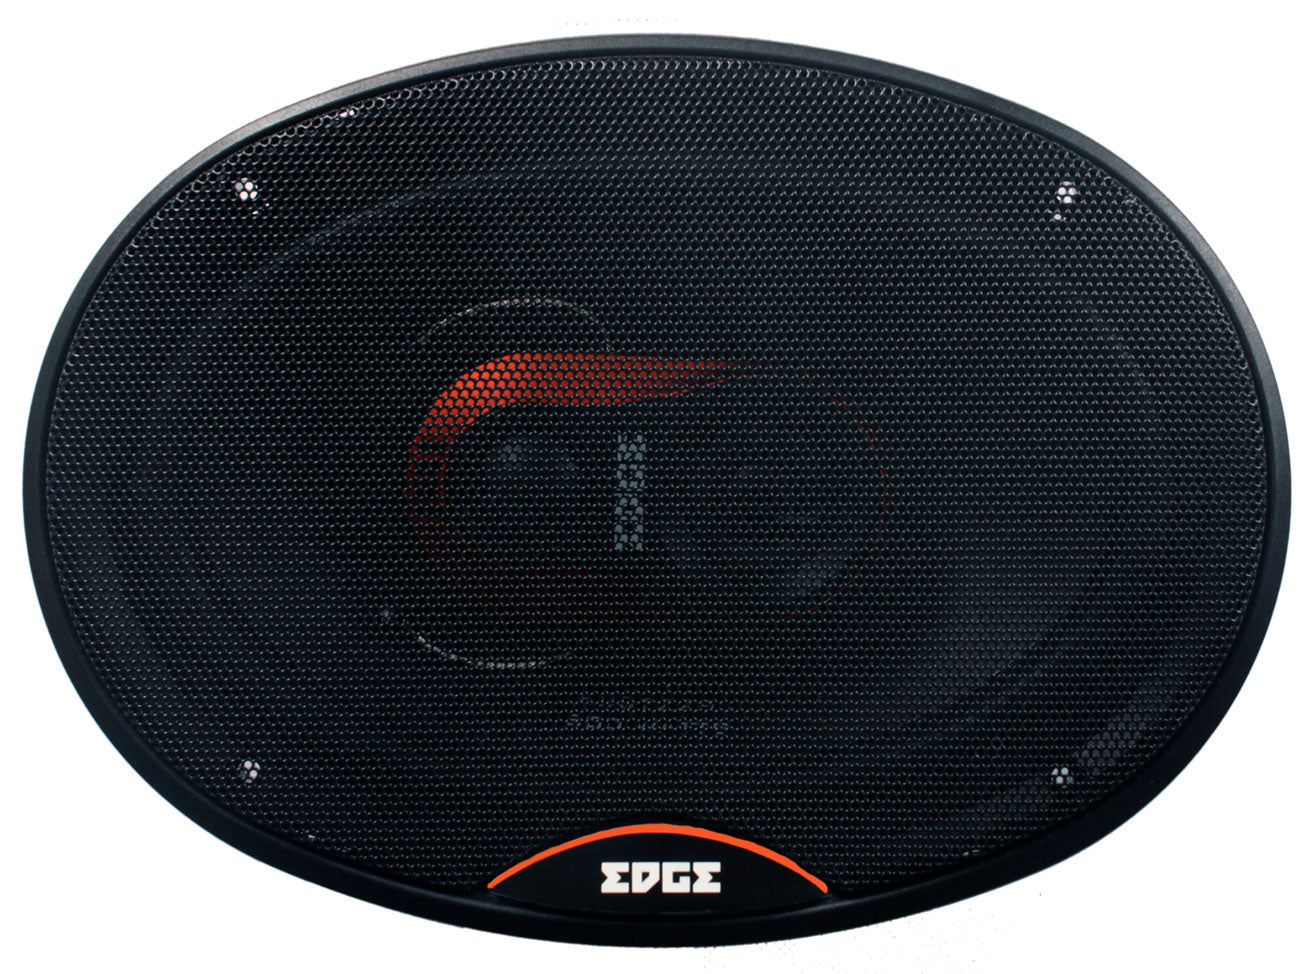 ED229-E8 | EDGE DB Series 6x9 inch 300 watts Coaxial Speakers - Pair